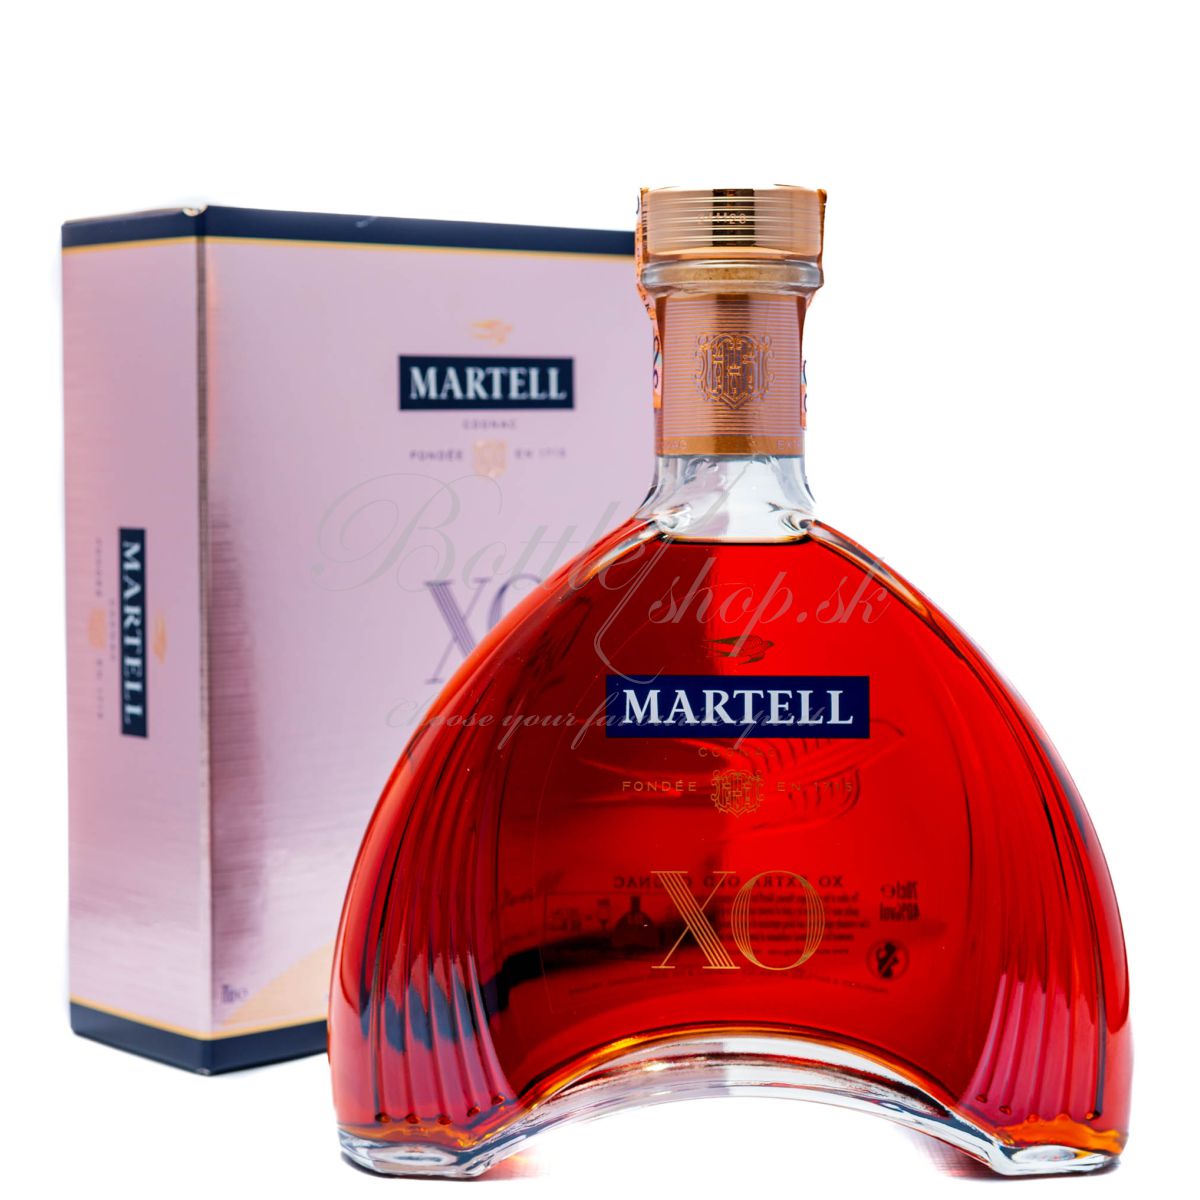 Martell,martell xo,martello,martell cognac,koňak